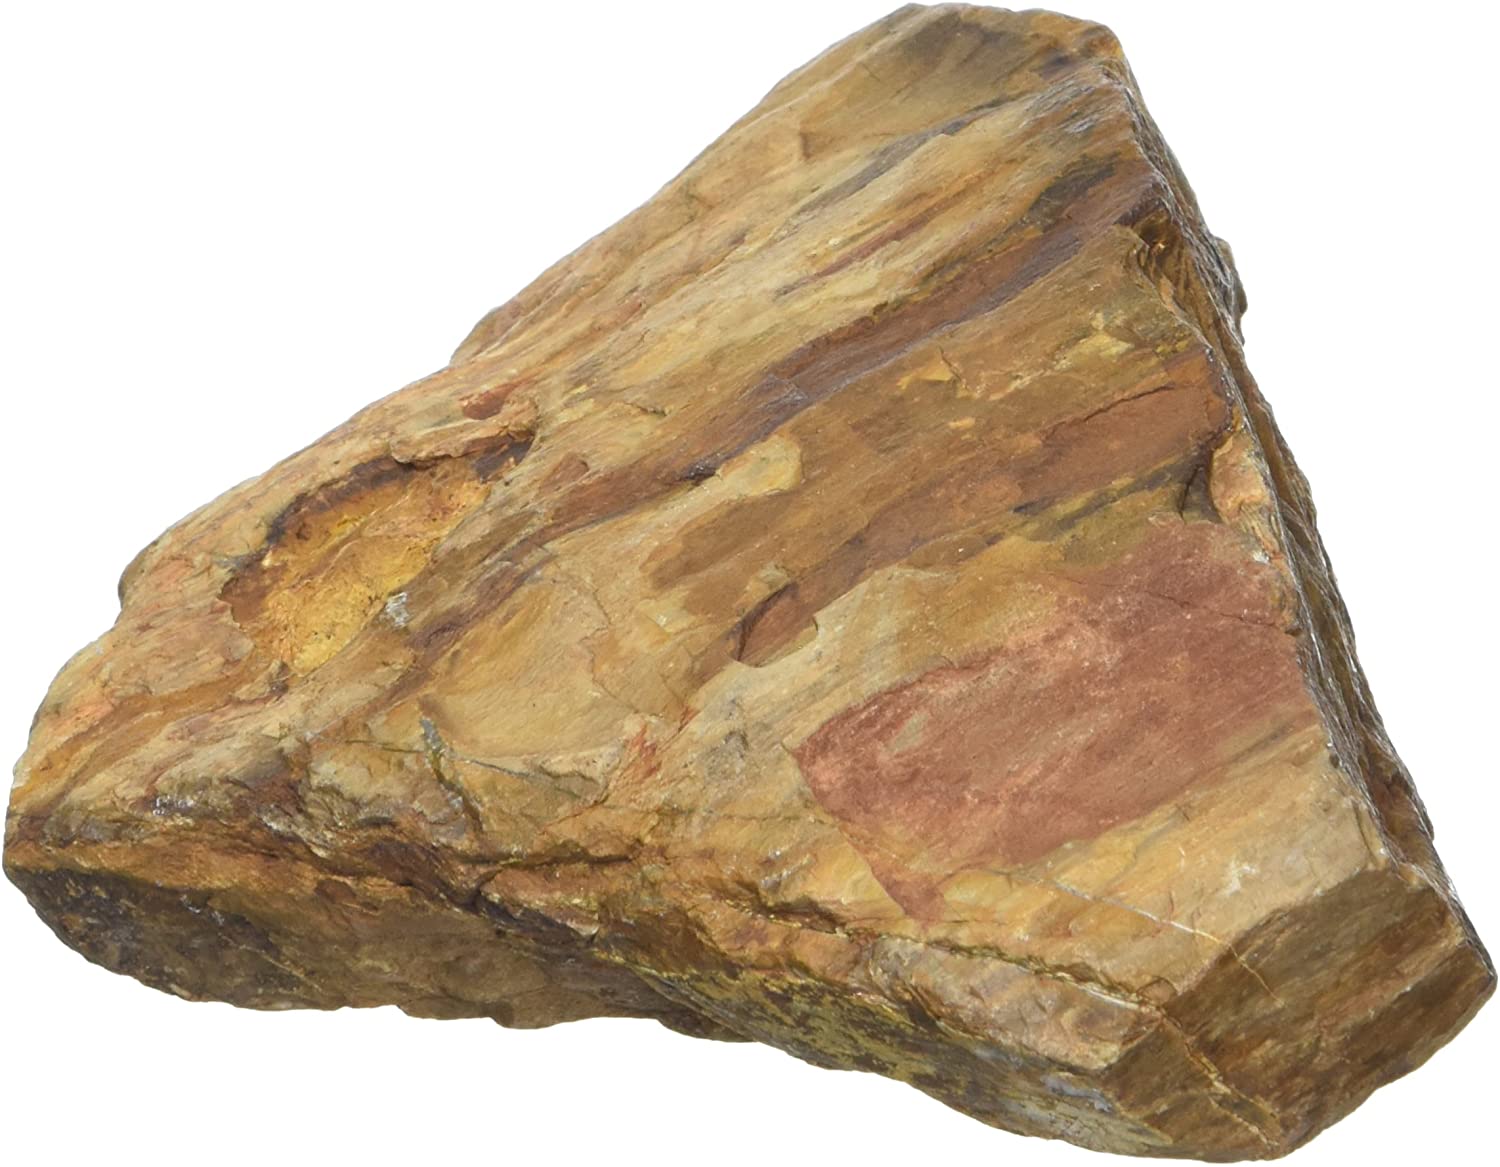  Croci A8047947 Roca Petrified, S, 0.5 kg 